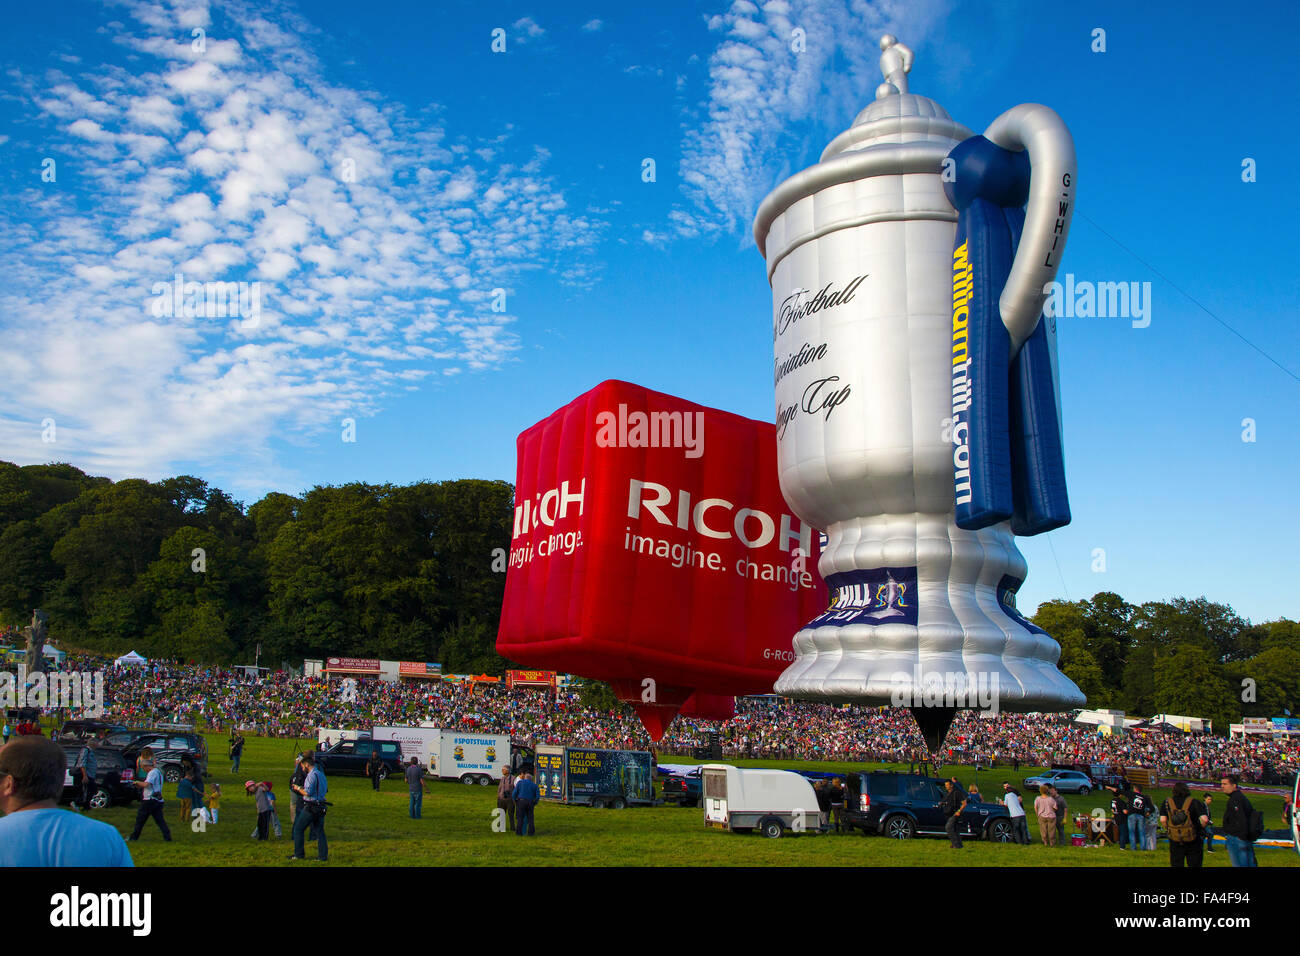 Scottish Association Challenge Cup e Ricoh i palloni ad aria calda al Bristol International Hot Air Balloon Fiesta 2015 Foto Stock